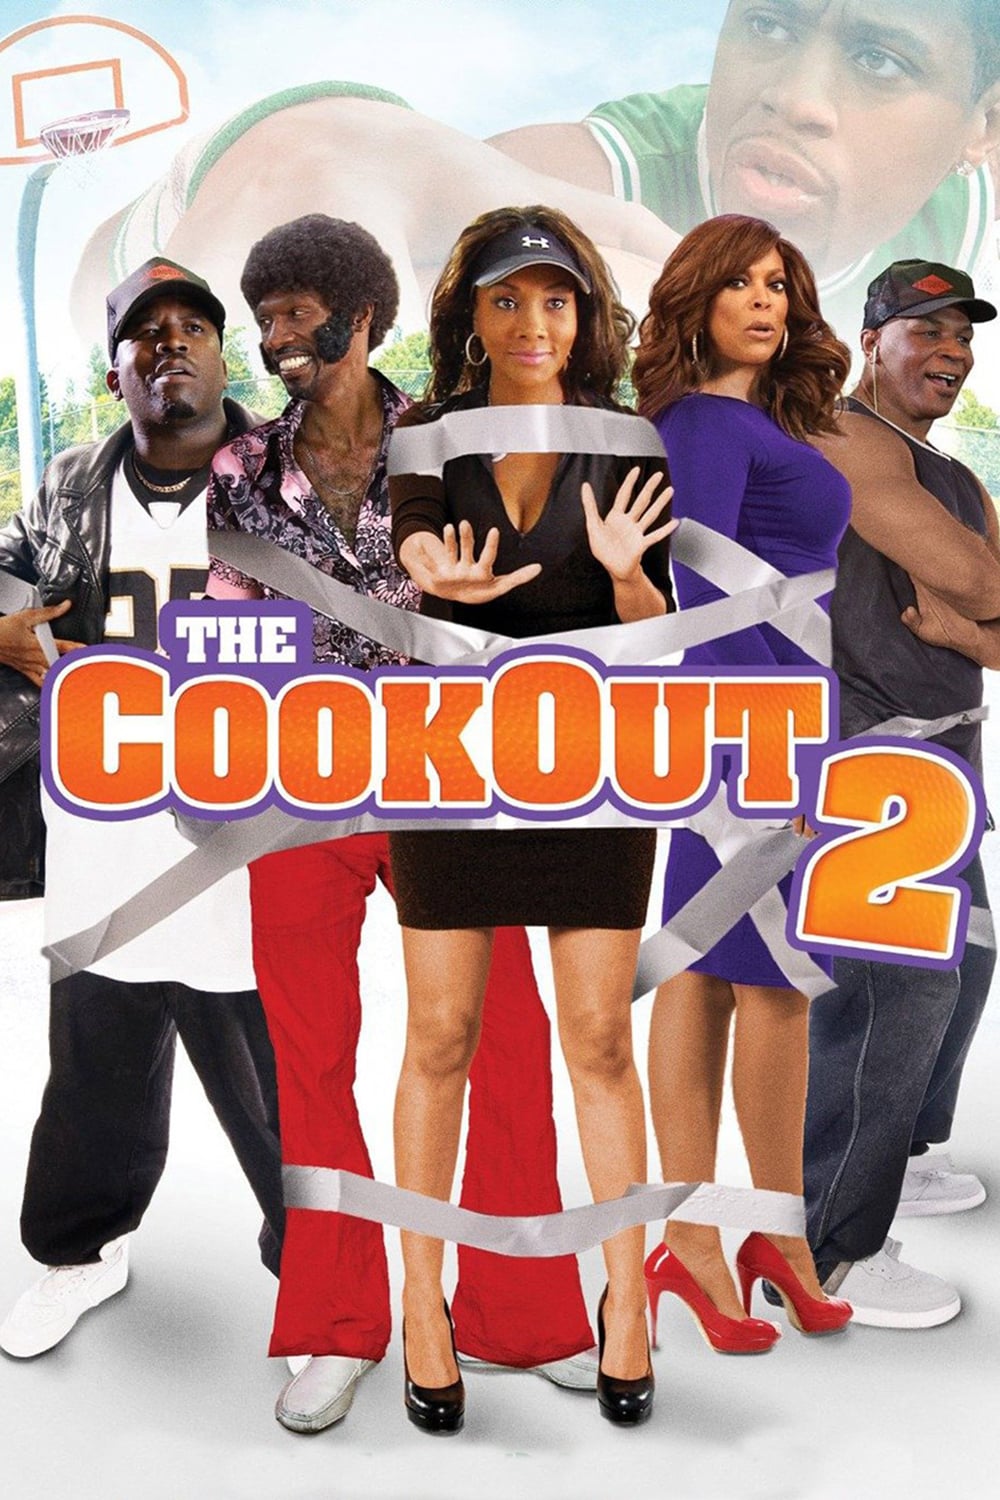 Plakat von "The Cookout 2"